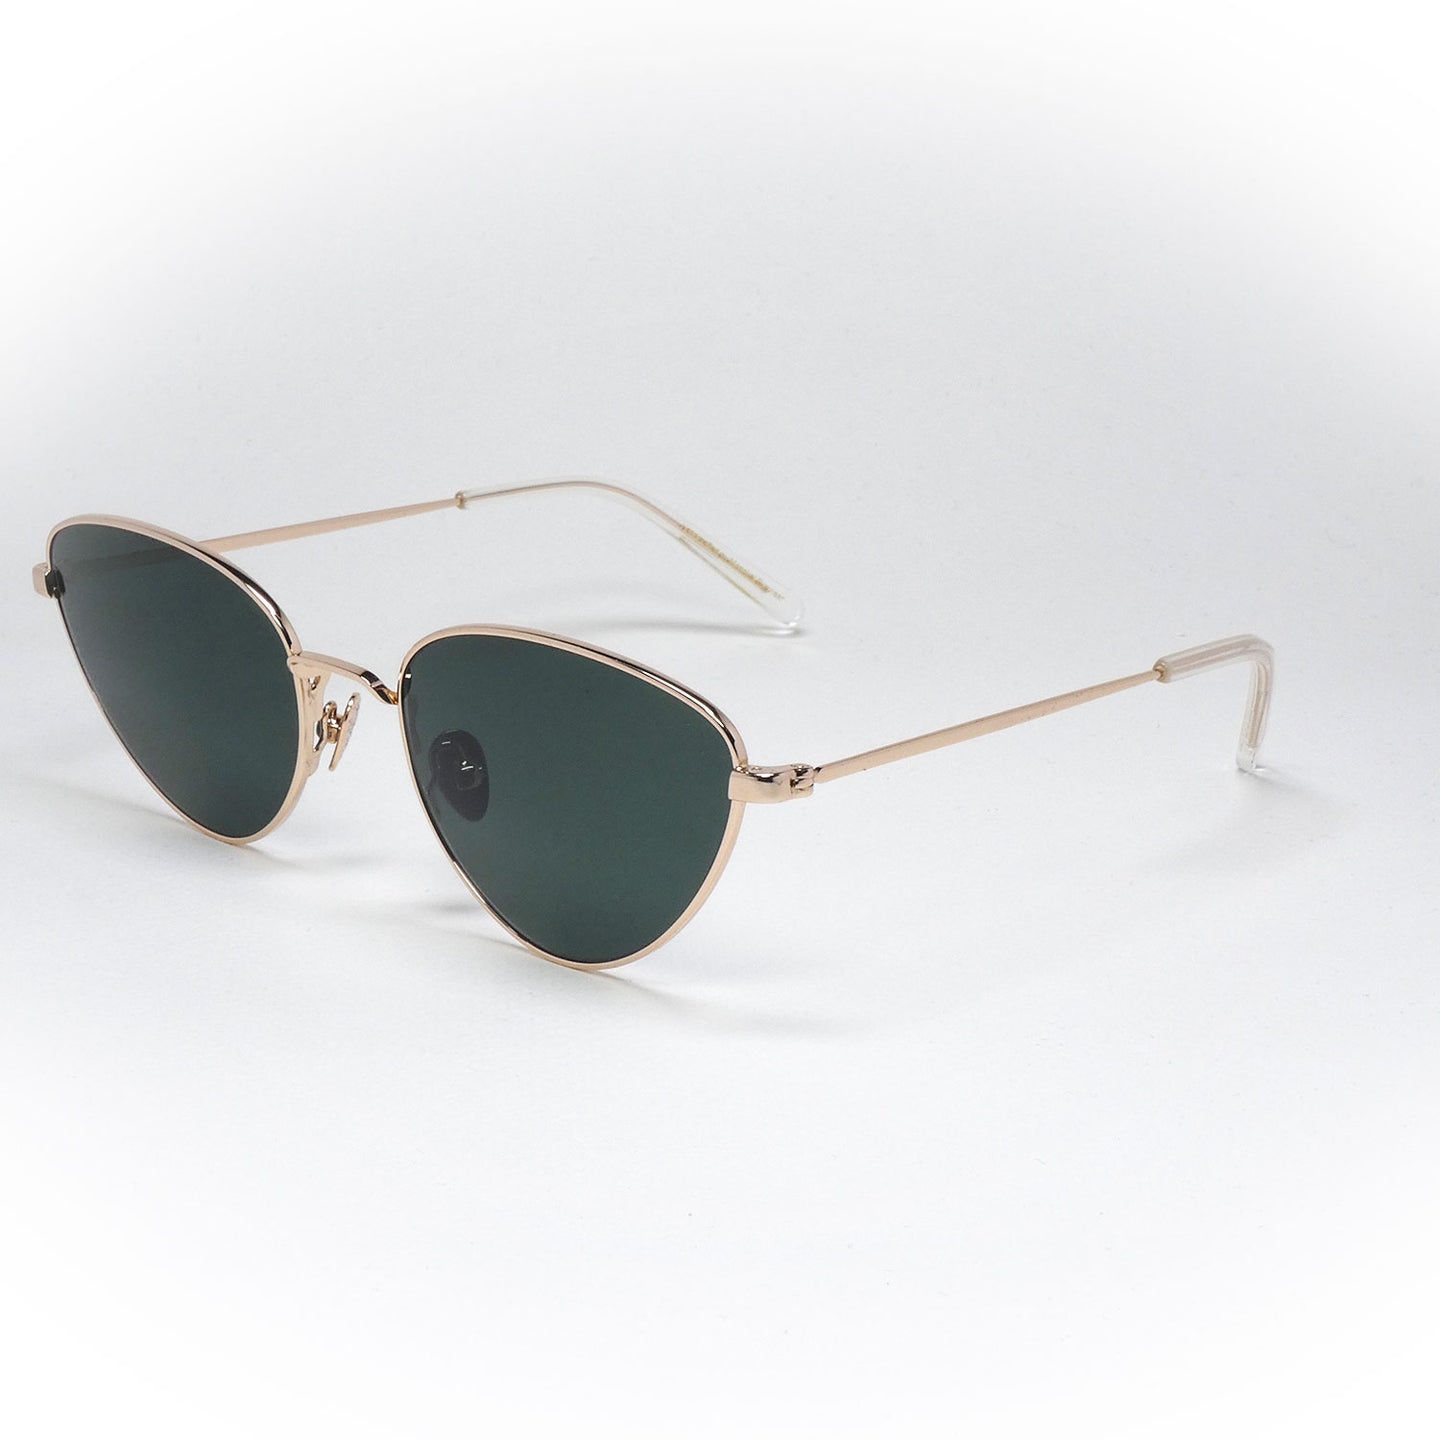 sunglasses monokel model luna color gold angled view